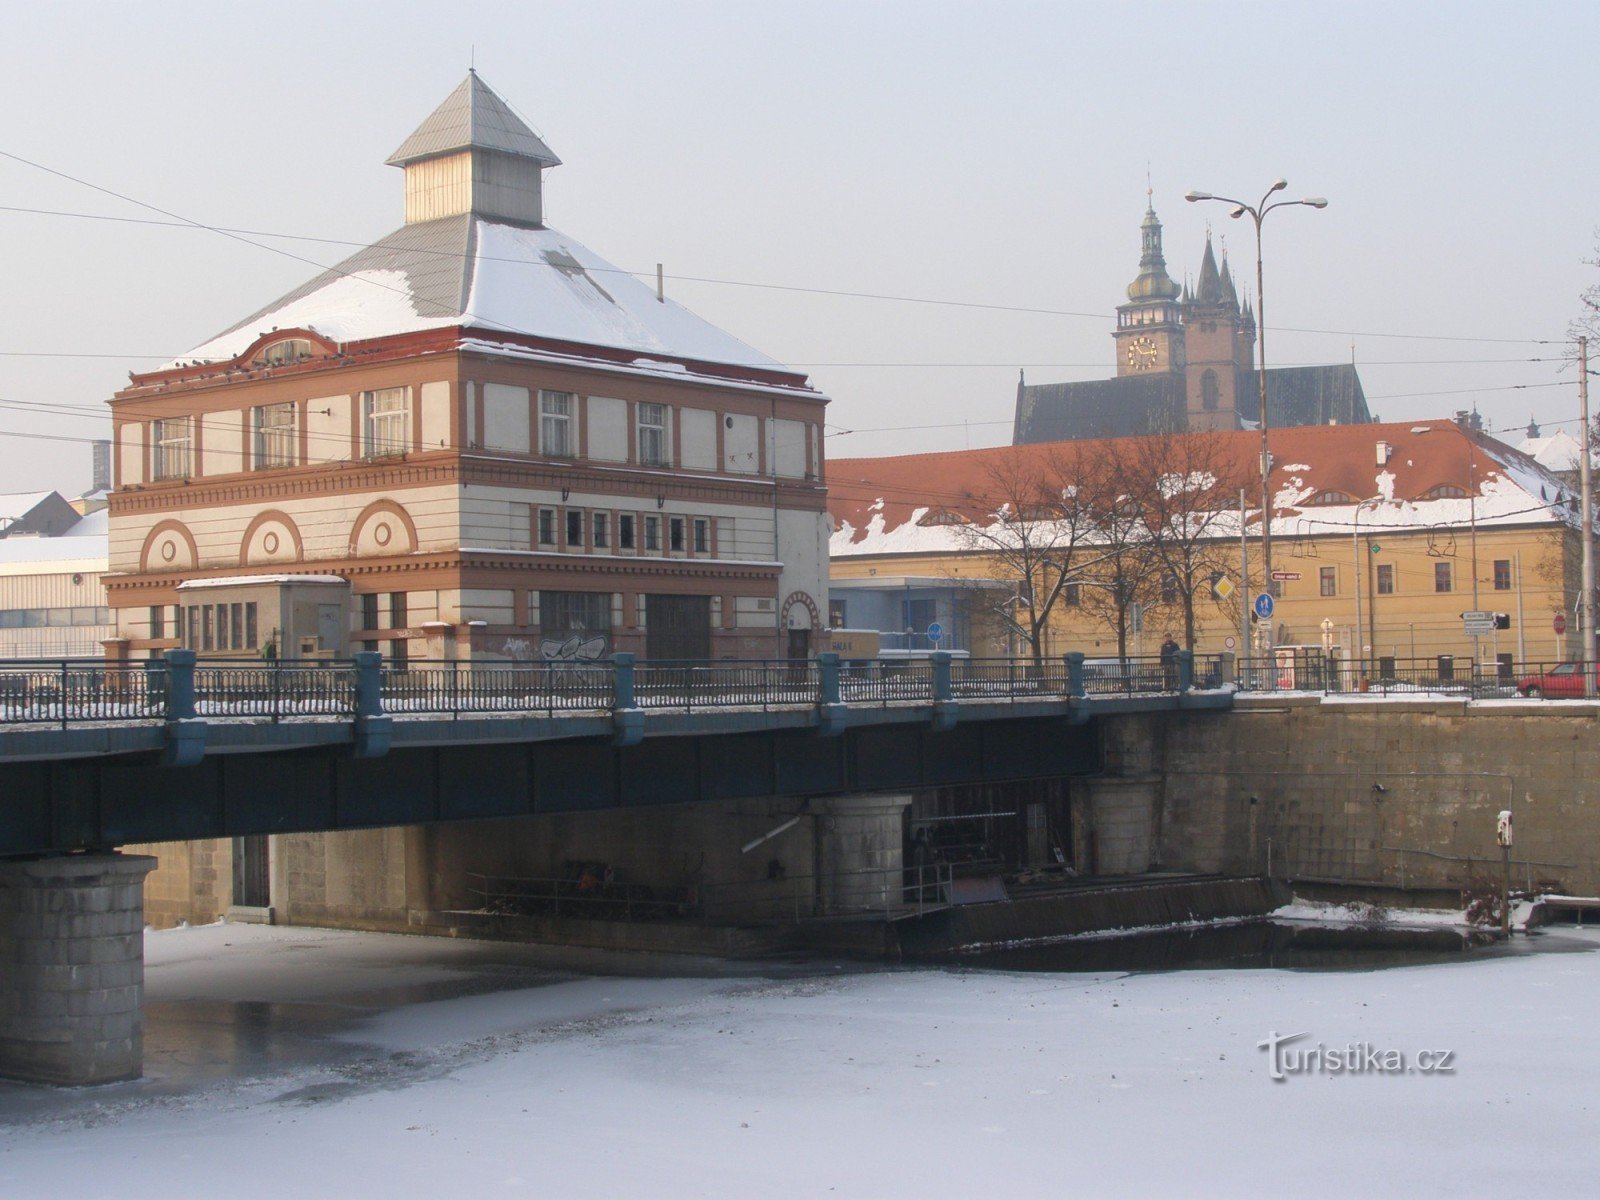 Moravský jez - nhà máy thủy điện trên Orlica